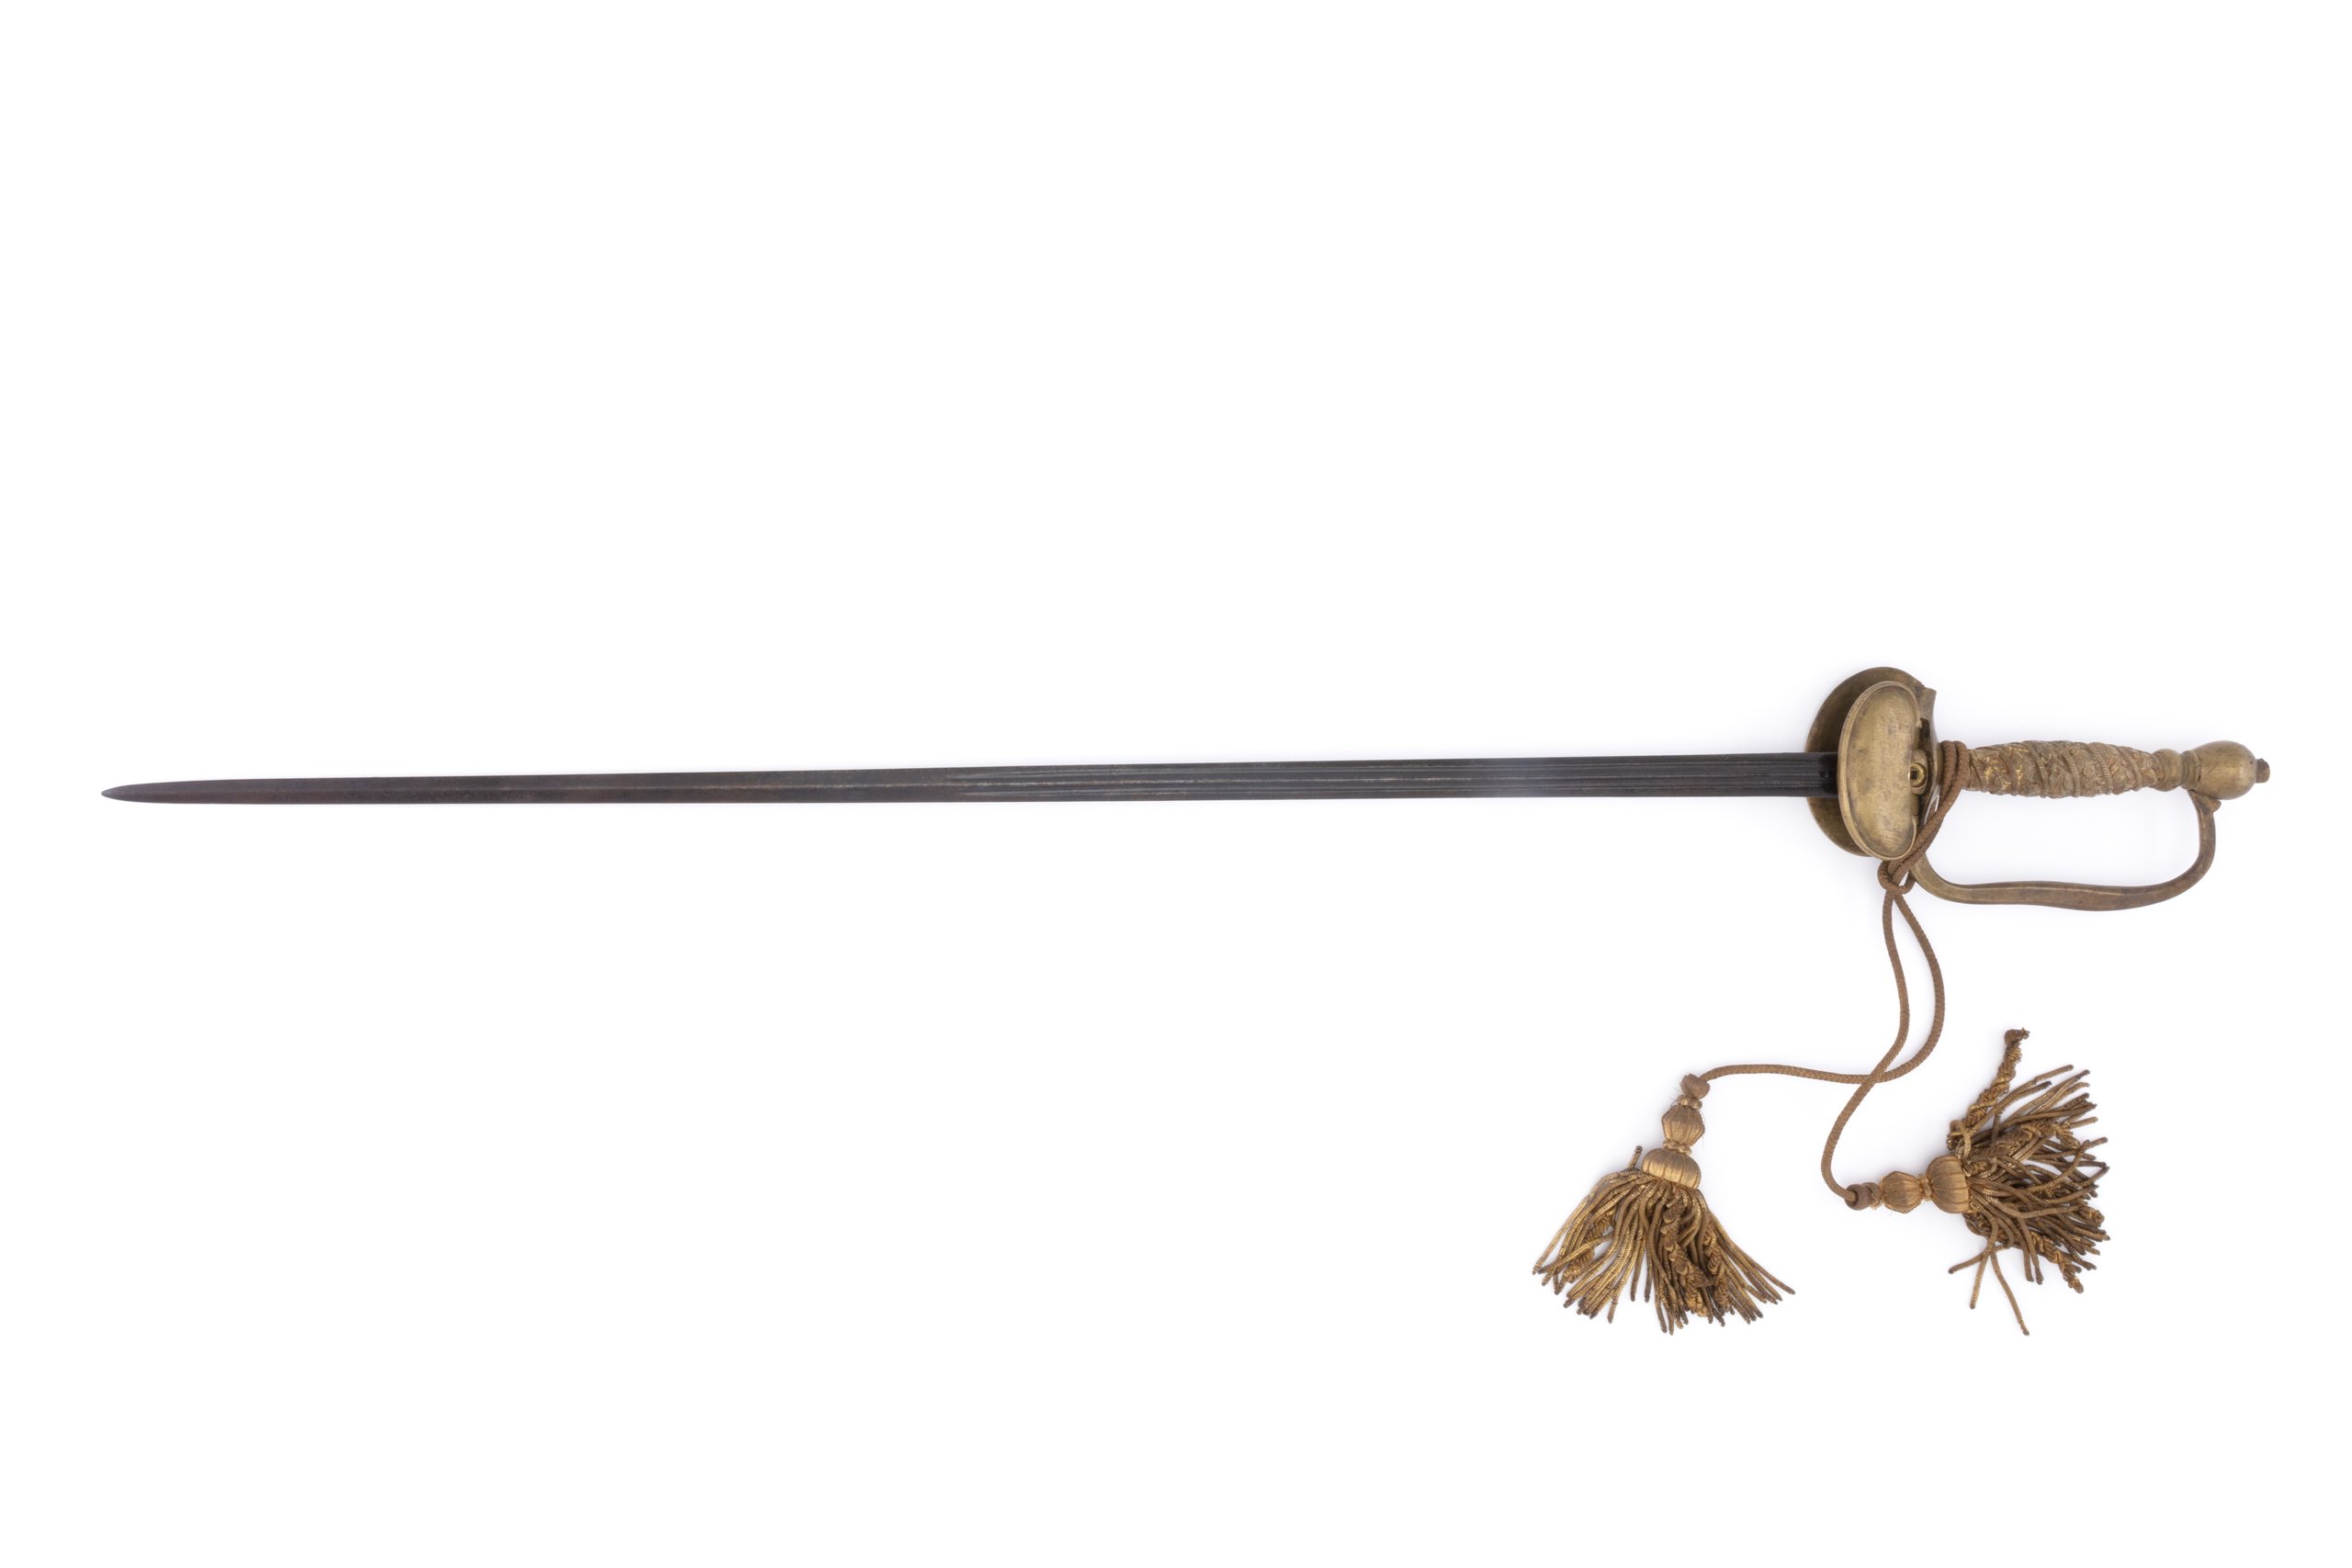 Matadors sword used by the Jandaschewsky family